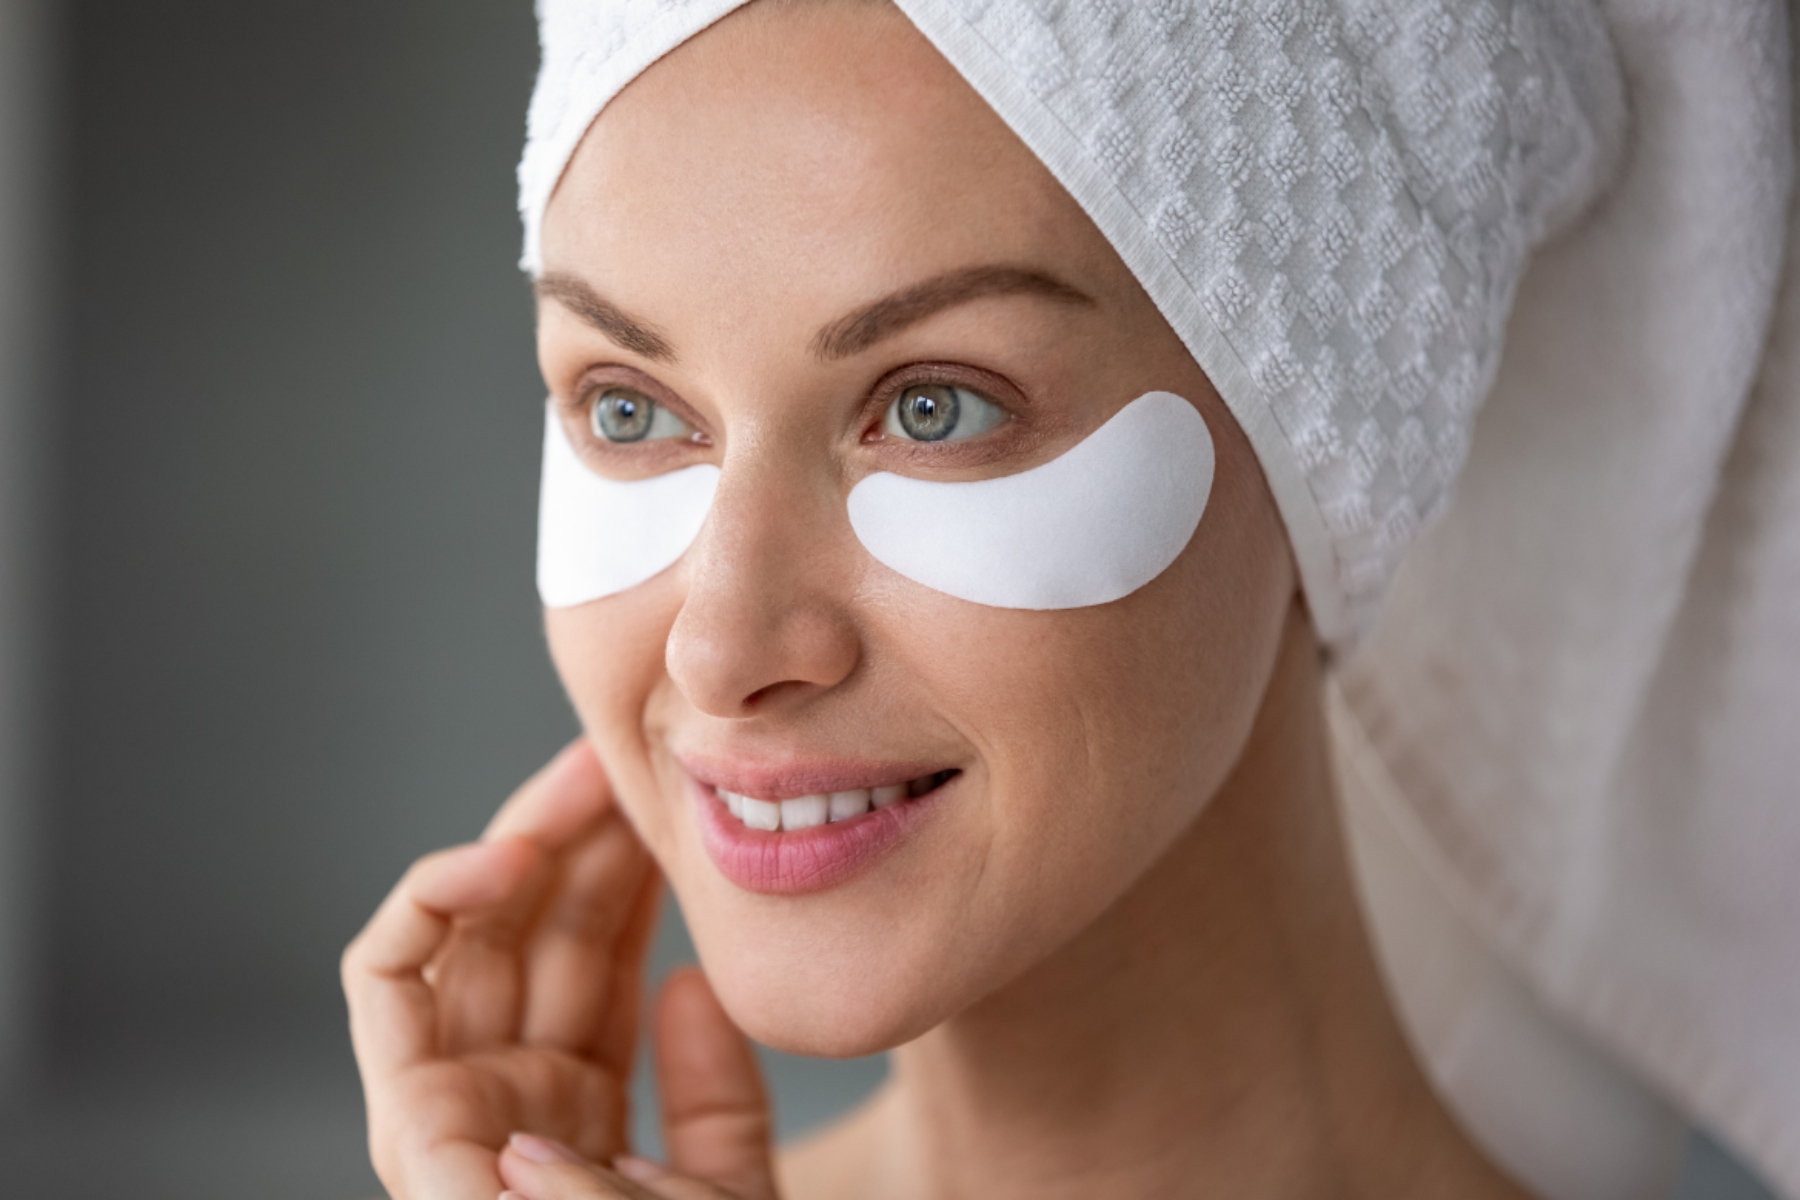 Beauty tips ρυτίδες: Πώς να αποτρέψετε τις ρυτίδες γύρω από τα μάτια σας